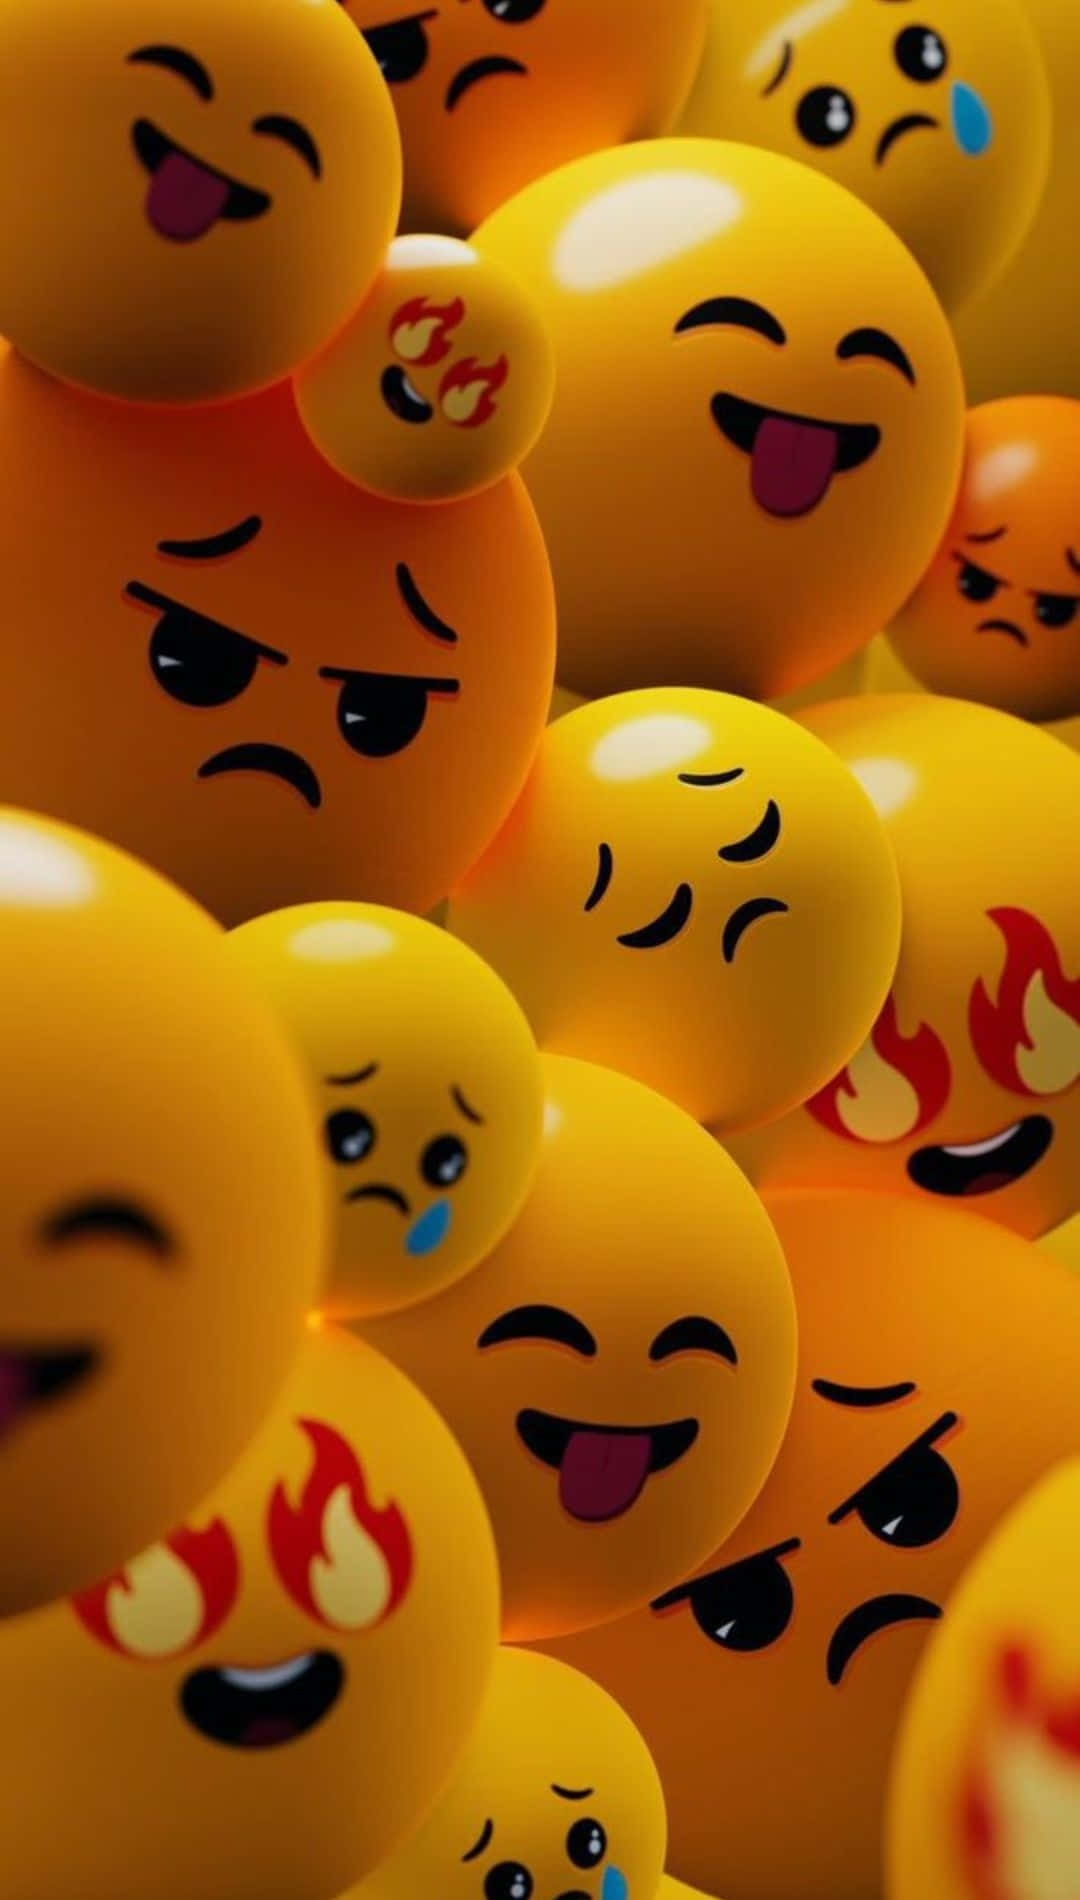 Assorted Emoji Expressions Image Wallpaper